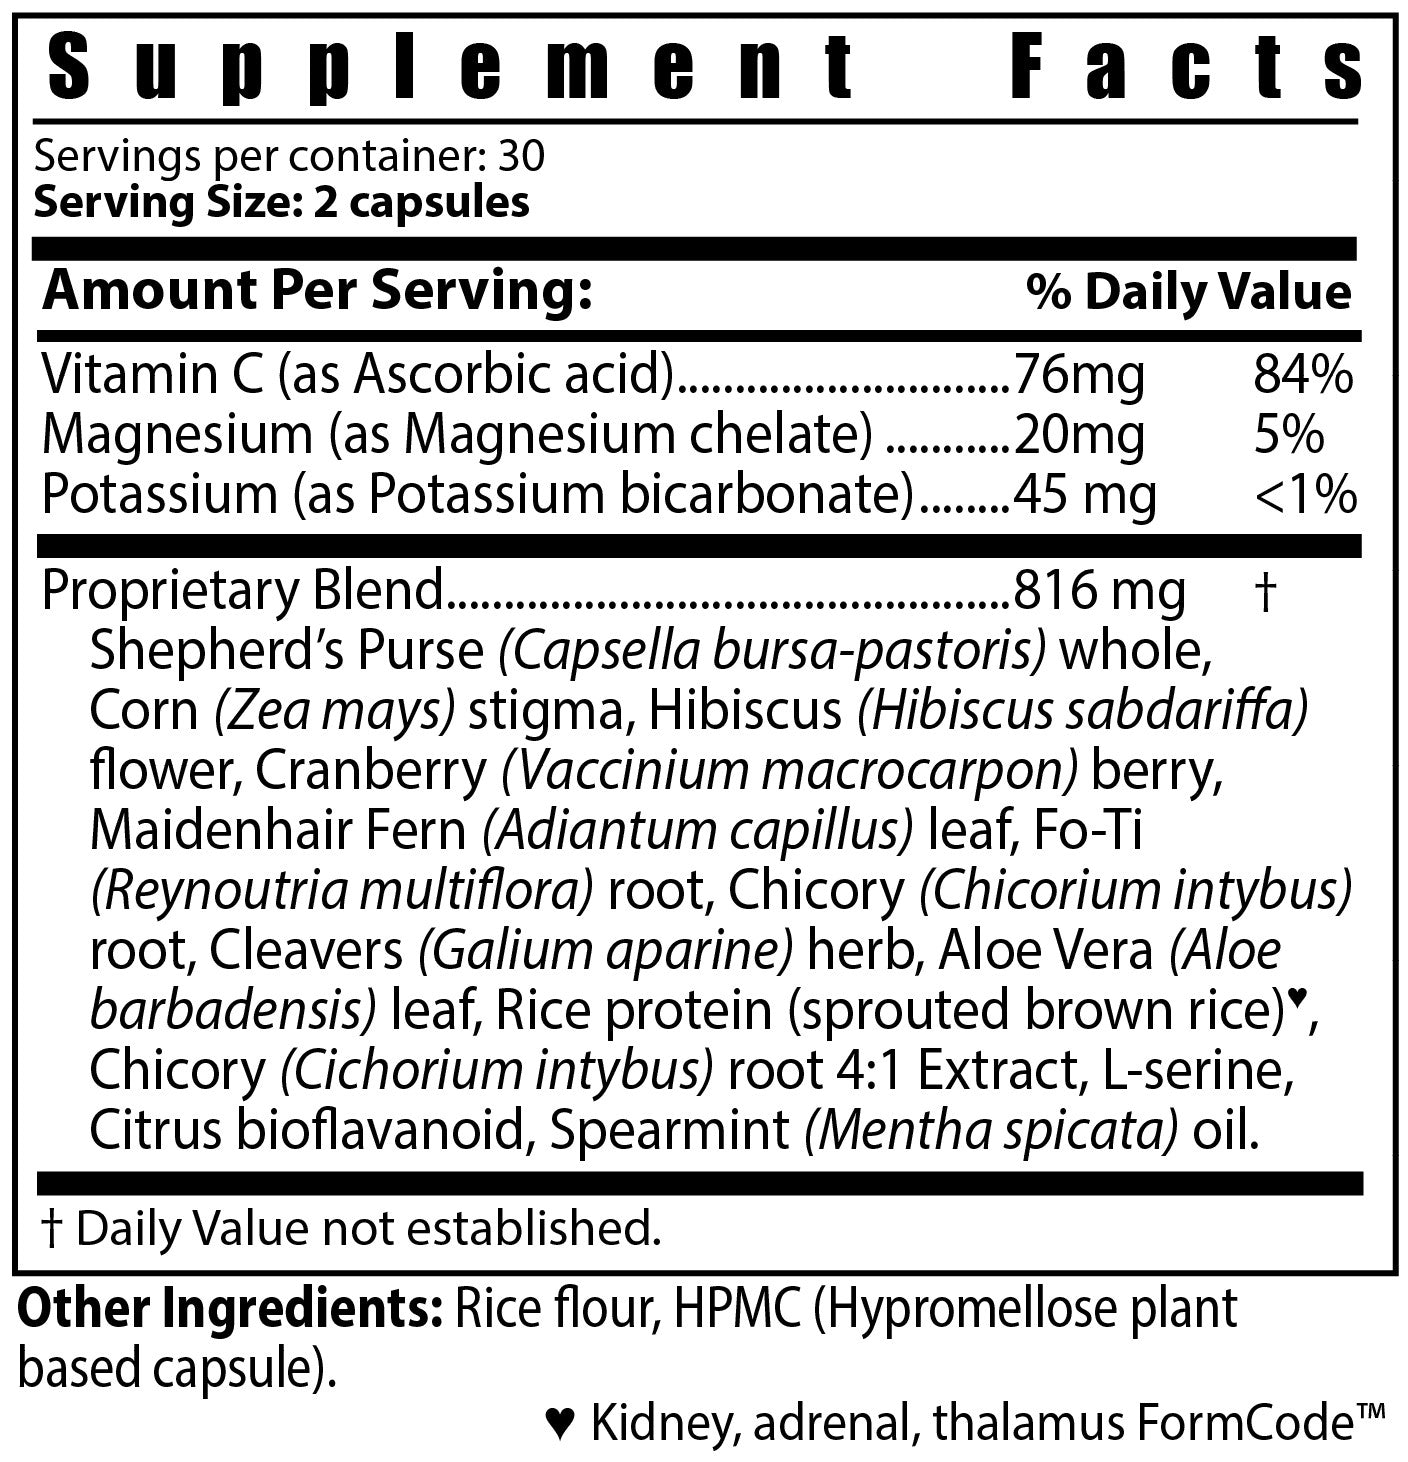 Inno-Vita Kidney-Klear™ -- 60 veggie capsules - Clear / Purify / Screen